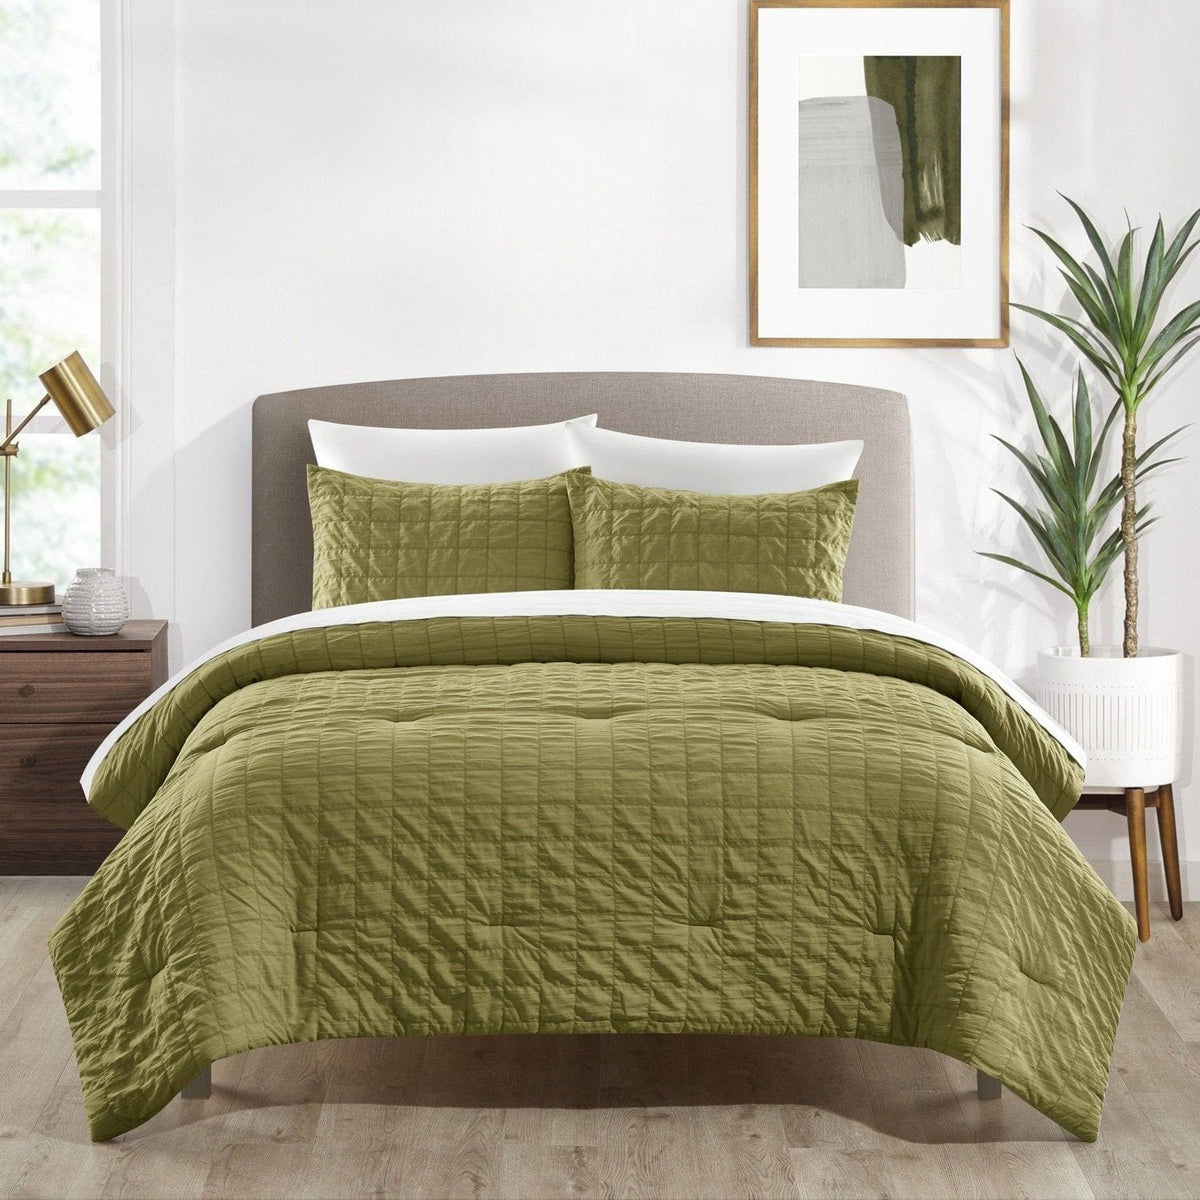 Chic Home Jessa 7 Piece Square Tile Pattern Comforter Set Green